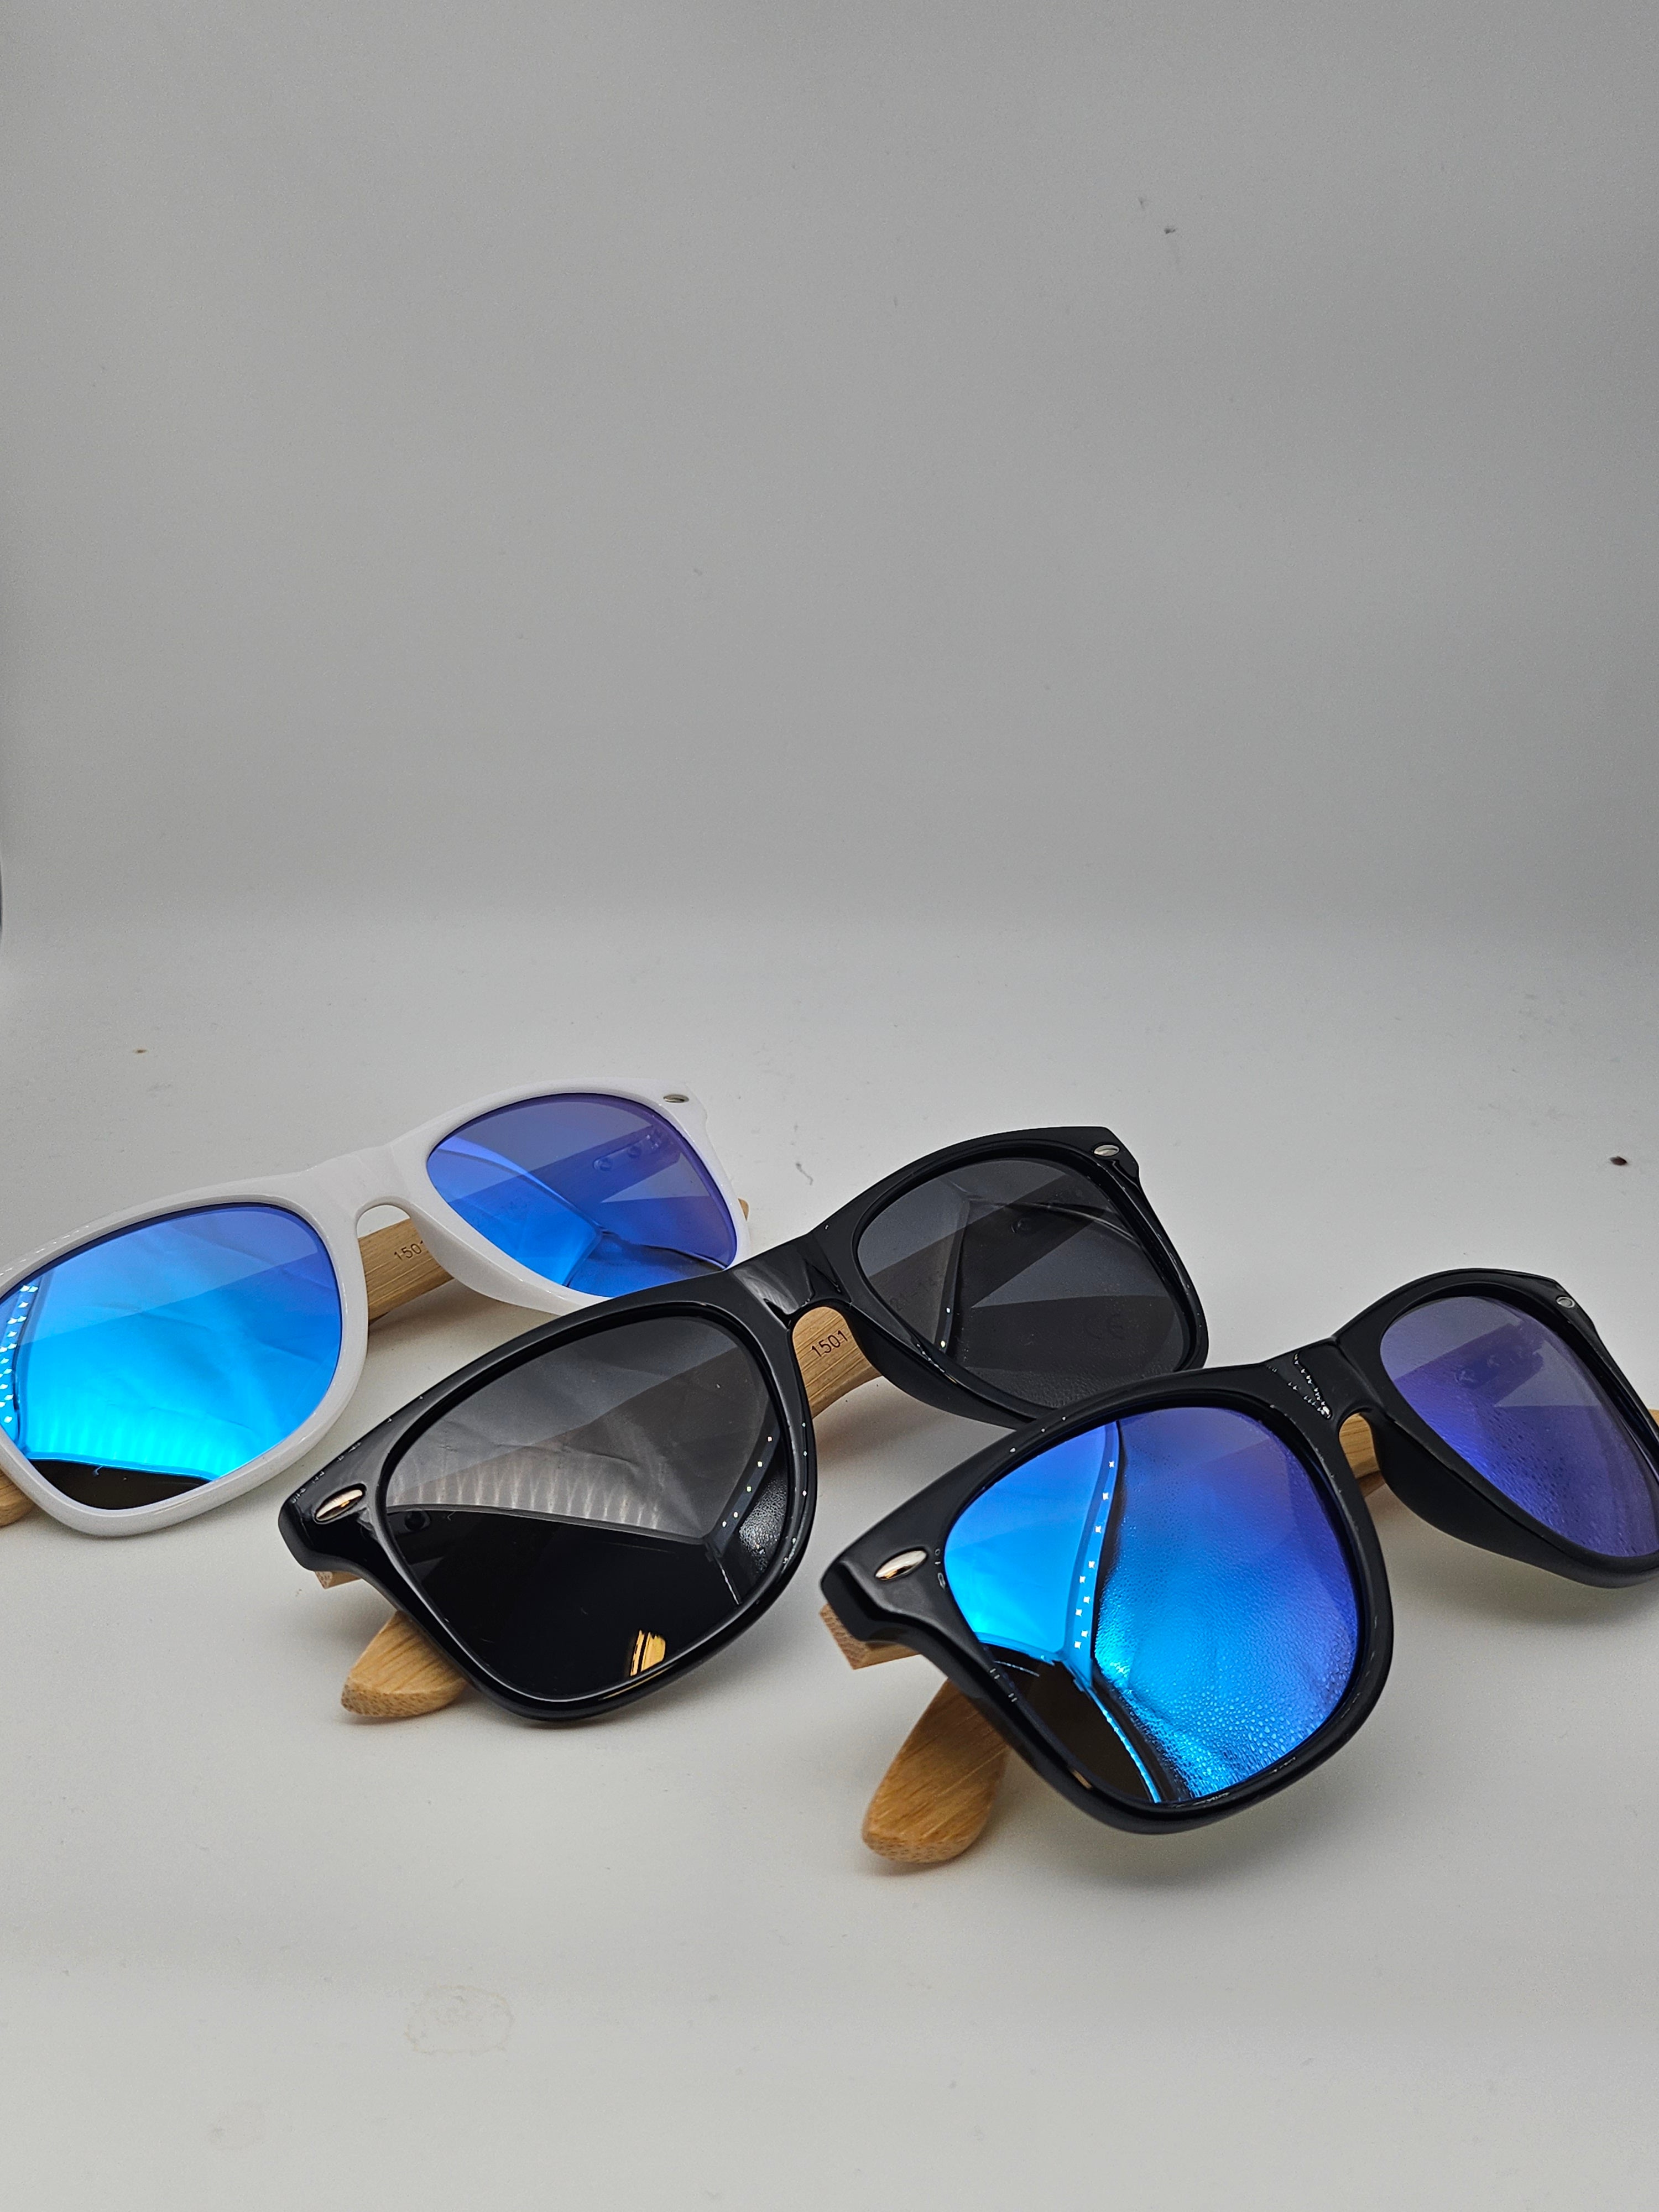 Polarized Sunglasses - SDGPT